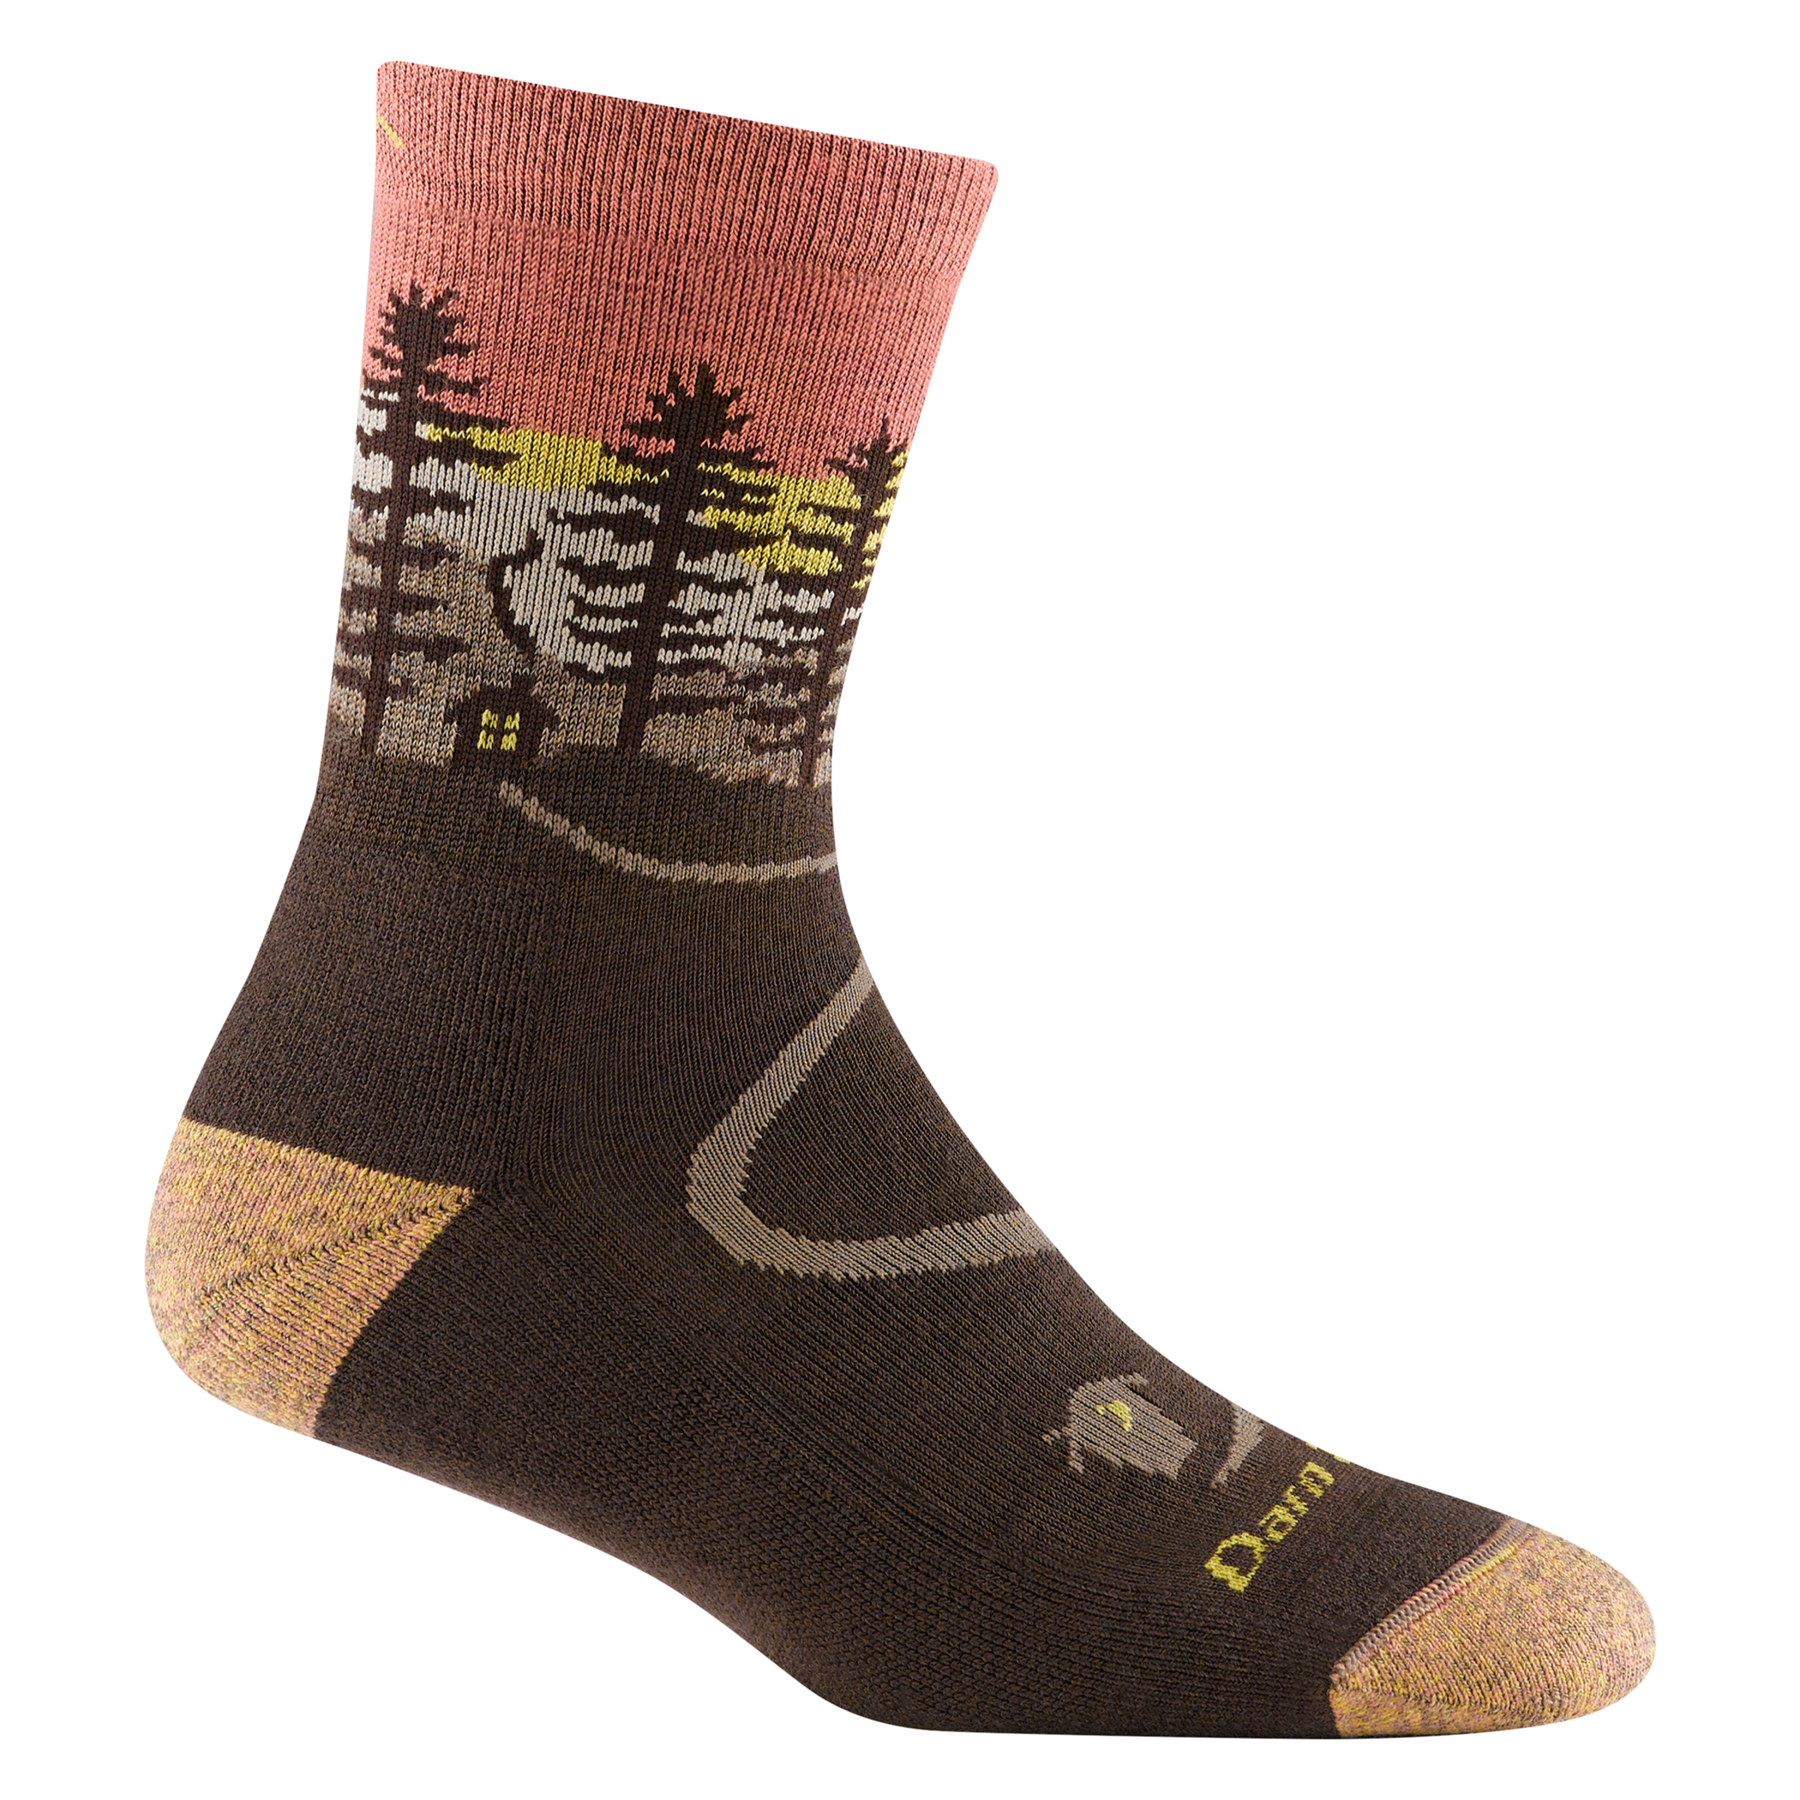 Woods™ Women's Hiking Socks, Grey